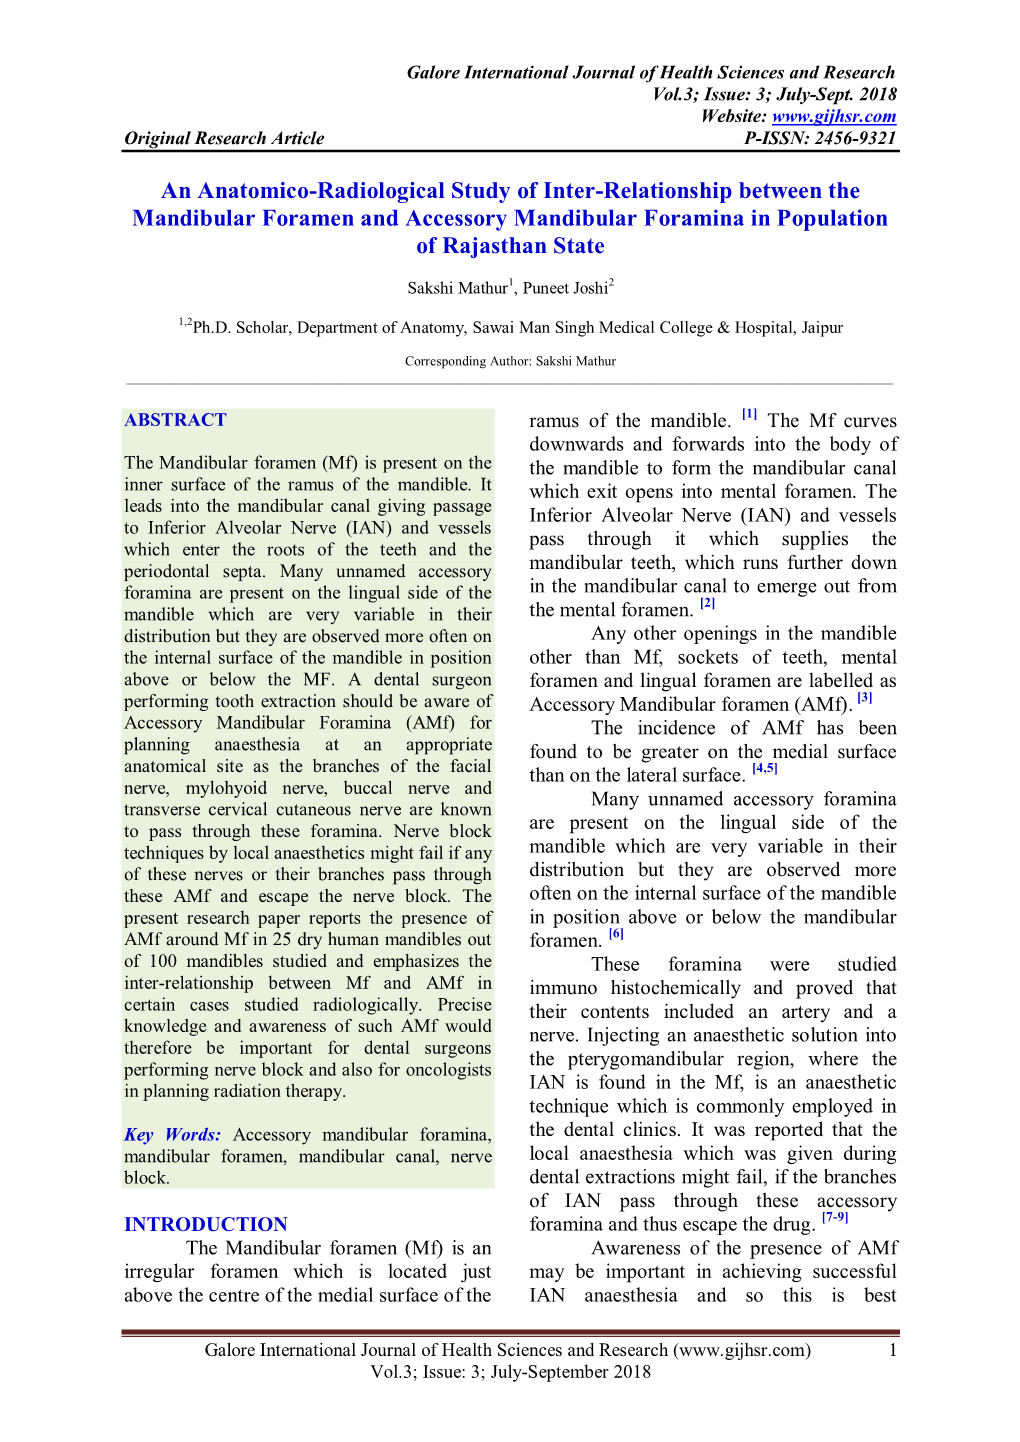 An Anatomico-Radiological Study of Inter-Relationship Between the Mandibular Foramen and Accessory Mandibular Foramina in Population of Rajasthan State